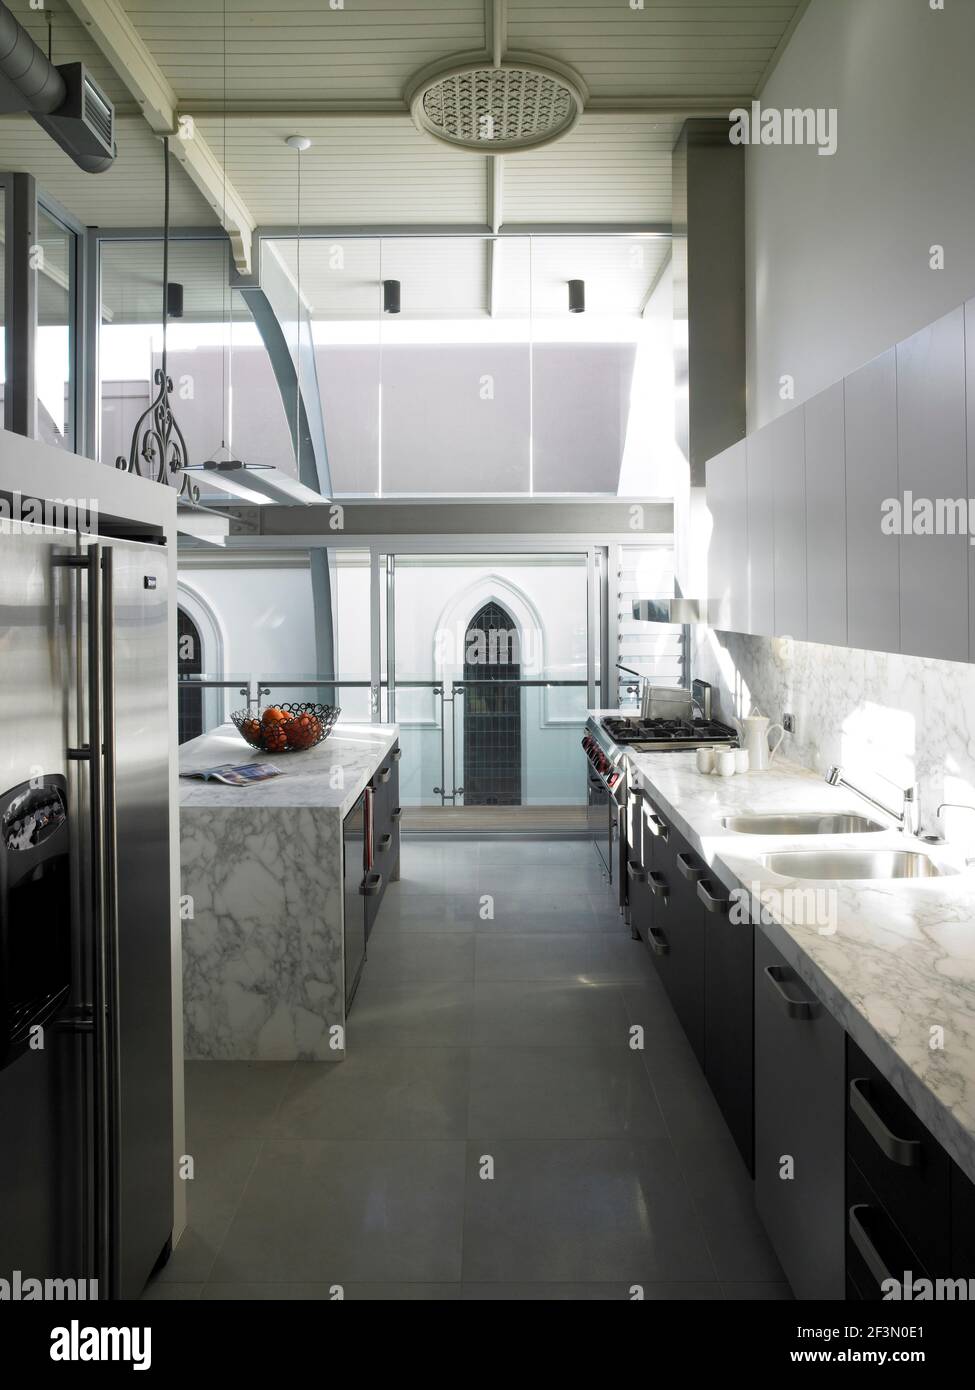 Spacious kitchen with island unit and tiled floor, Australia Stock Photo